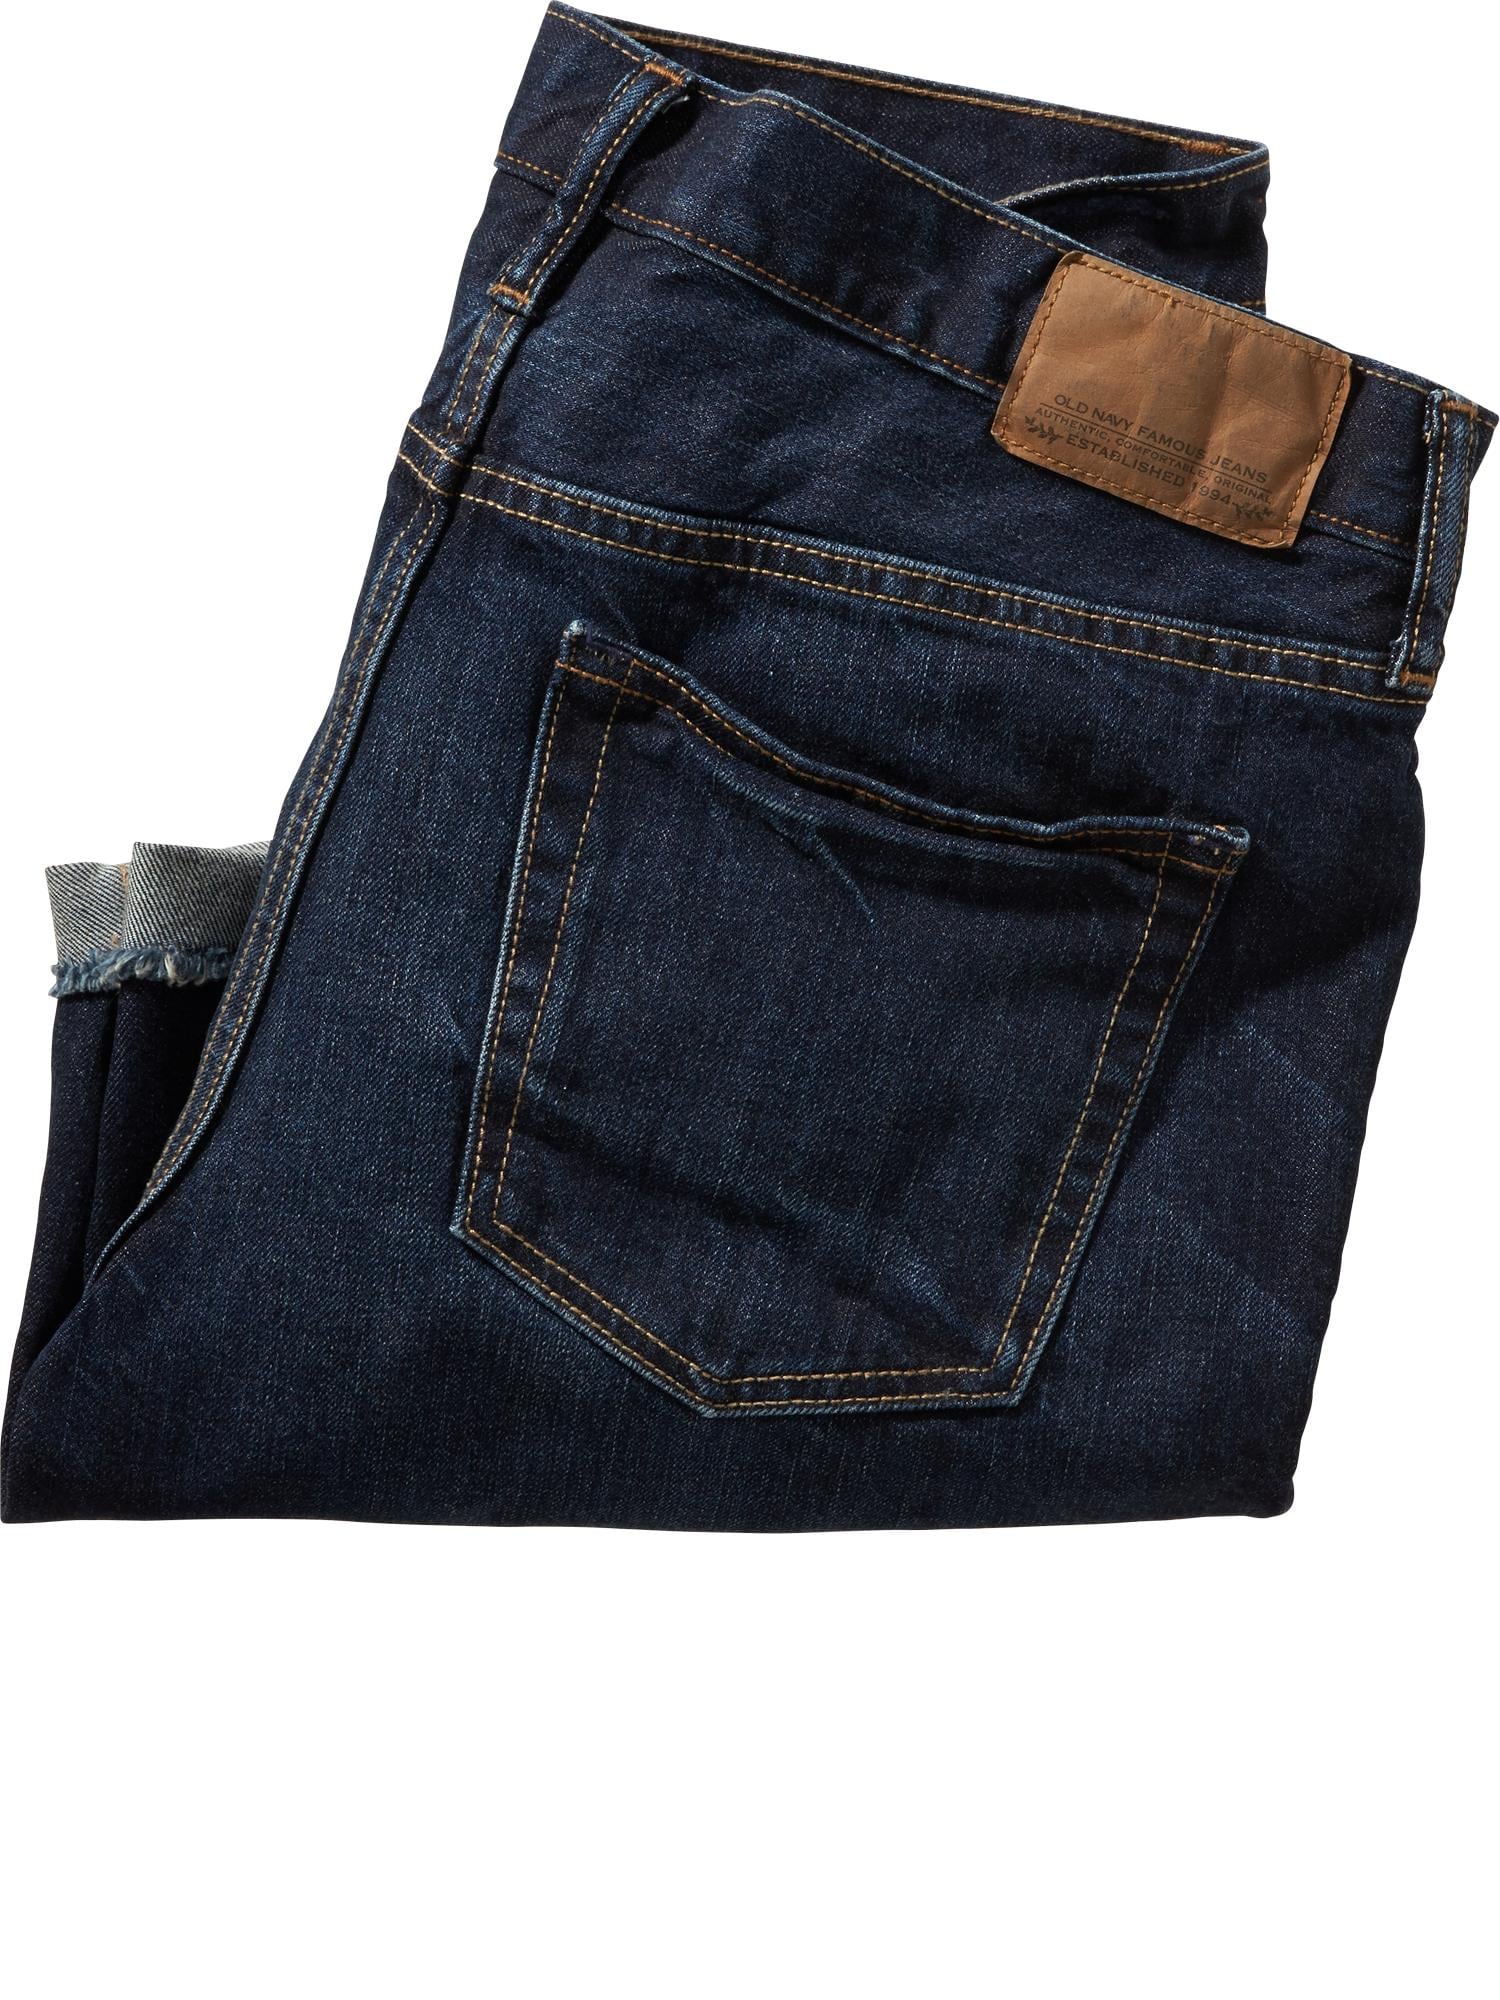 Men's Cuffed Denim Shorts (7 1/2